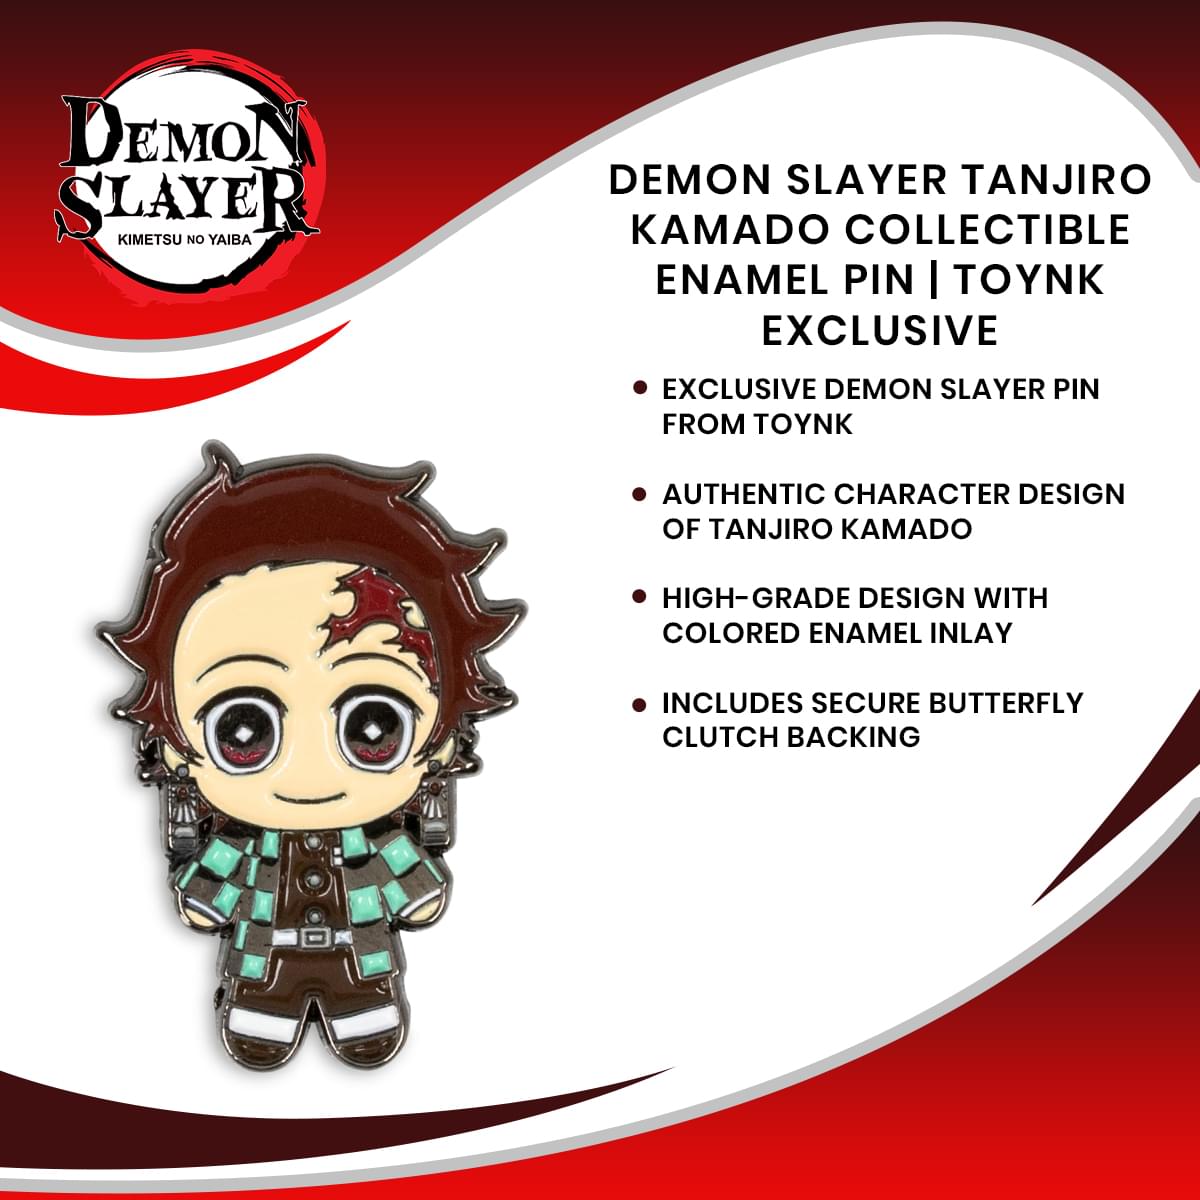 Demon Slayer Tanjiro Kamado Collectible Enamel Pin